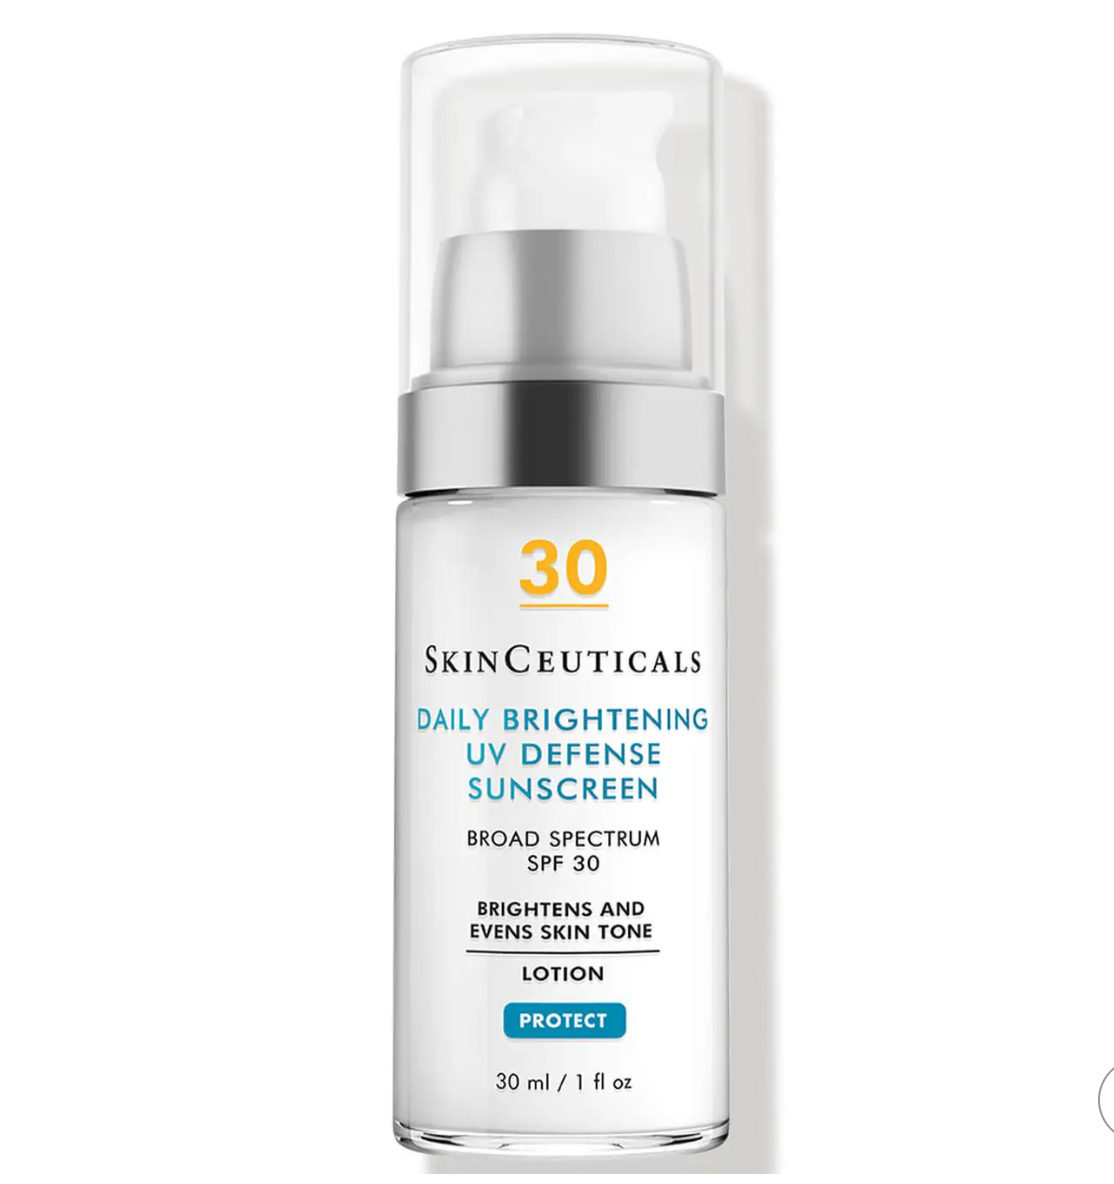 SkinCeuticals Daily Brightening UV Defense Sunscreen SPF 30 (1 oz)